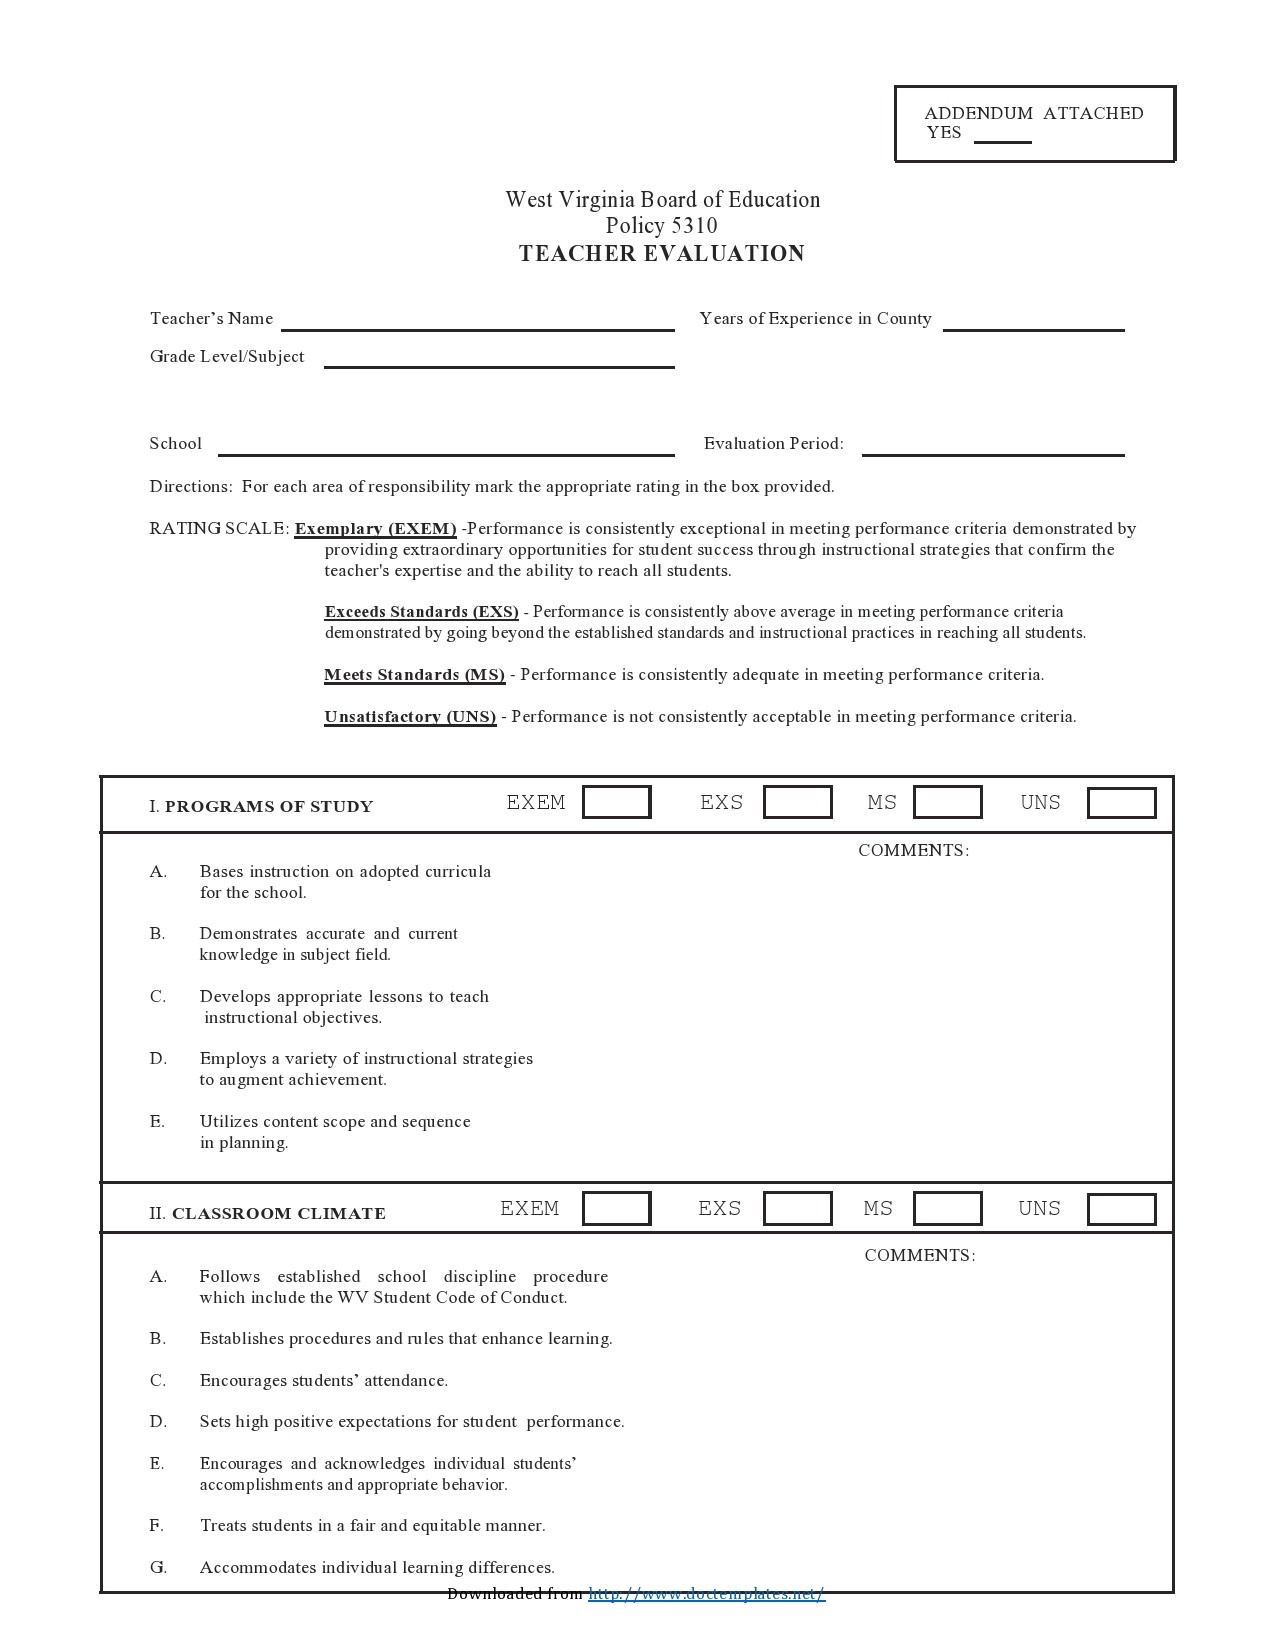 Free teacher evaluation form 27